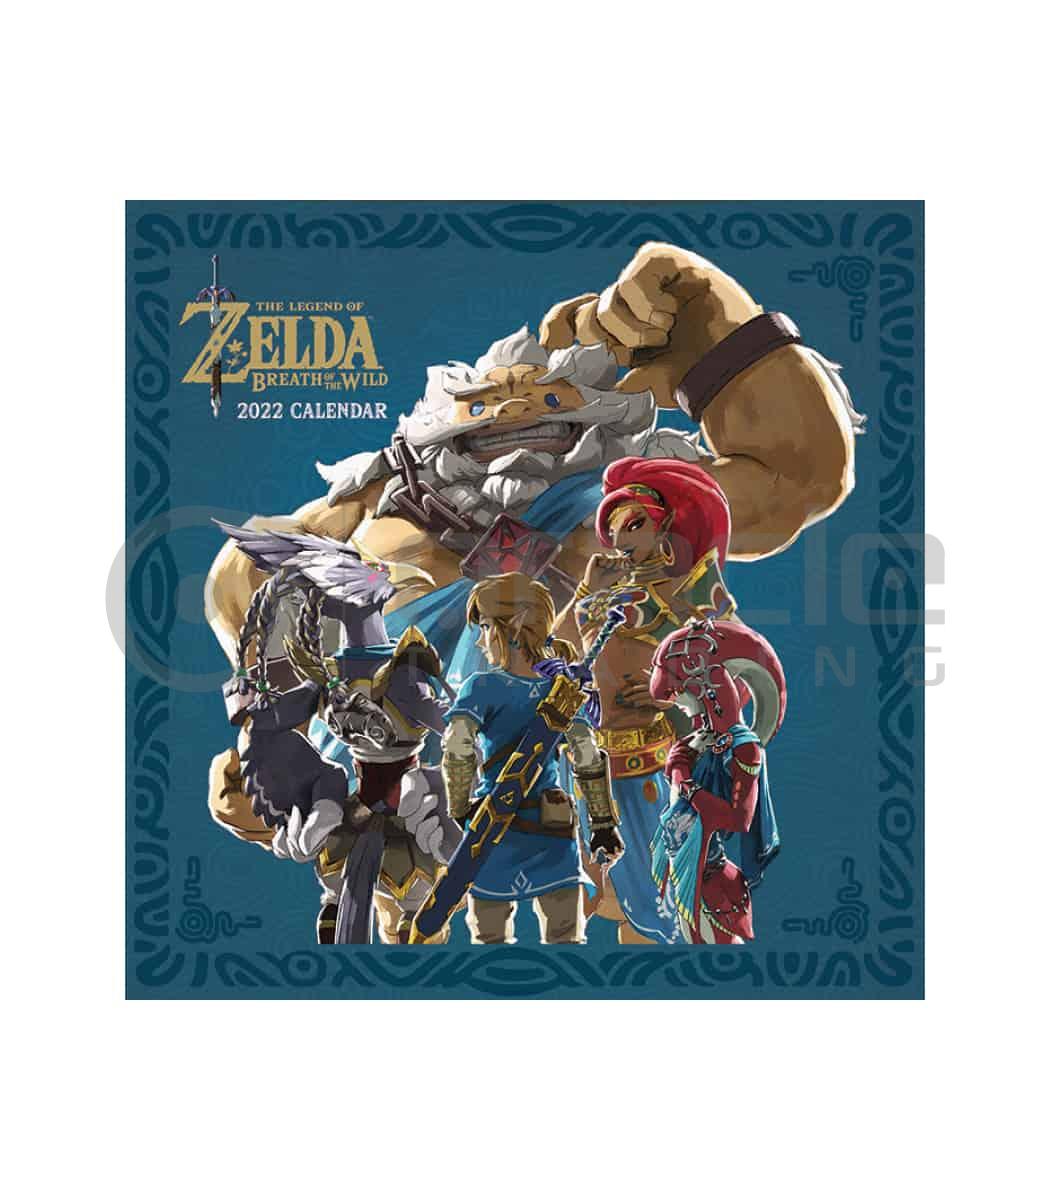 [PRE-ORDER] Zelda 2023 Calendar